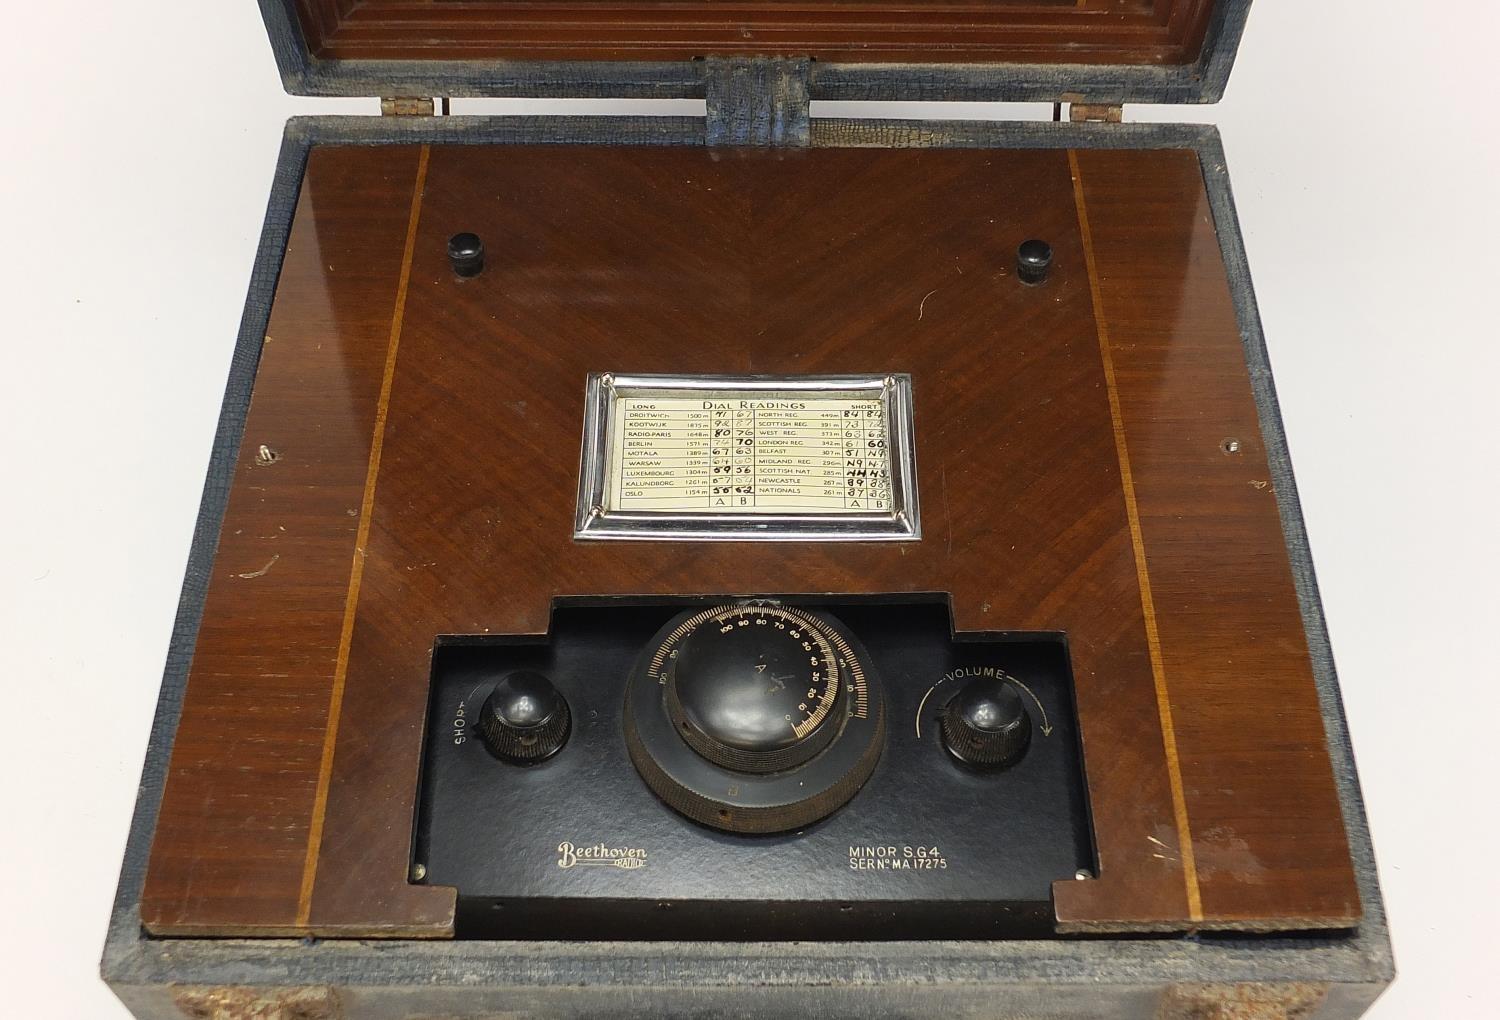 Vintage Beethoven radio with original Vidor battery, 23.5cm H x 35cm W x 33cm D - Image 3 of 7